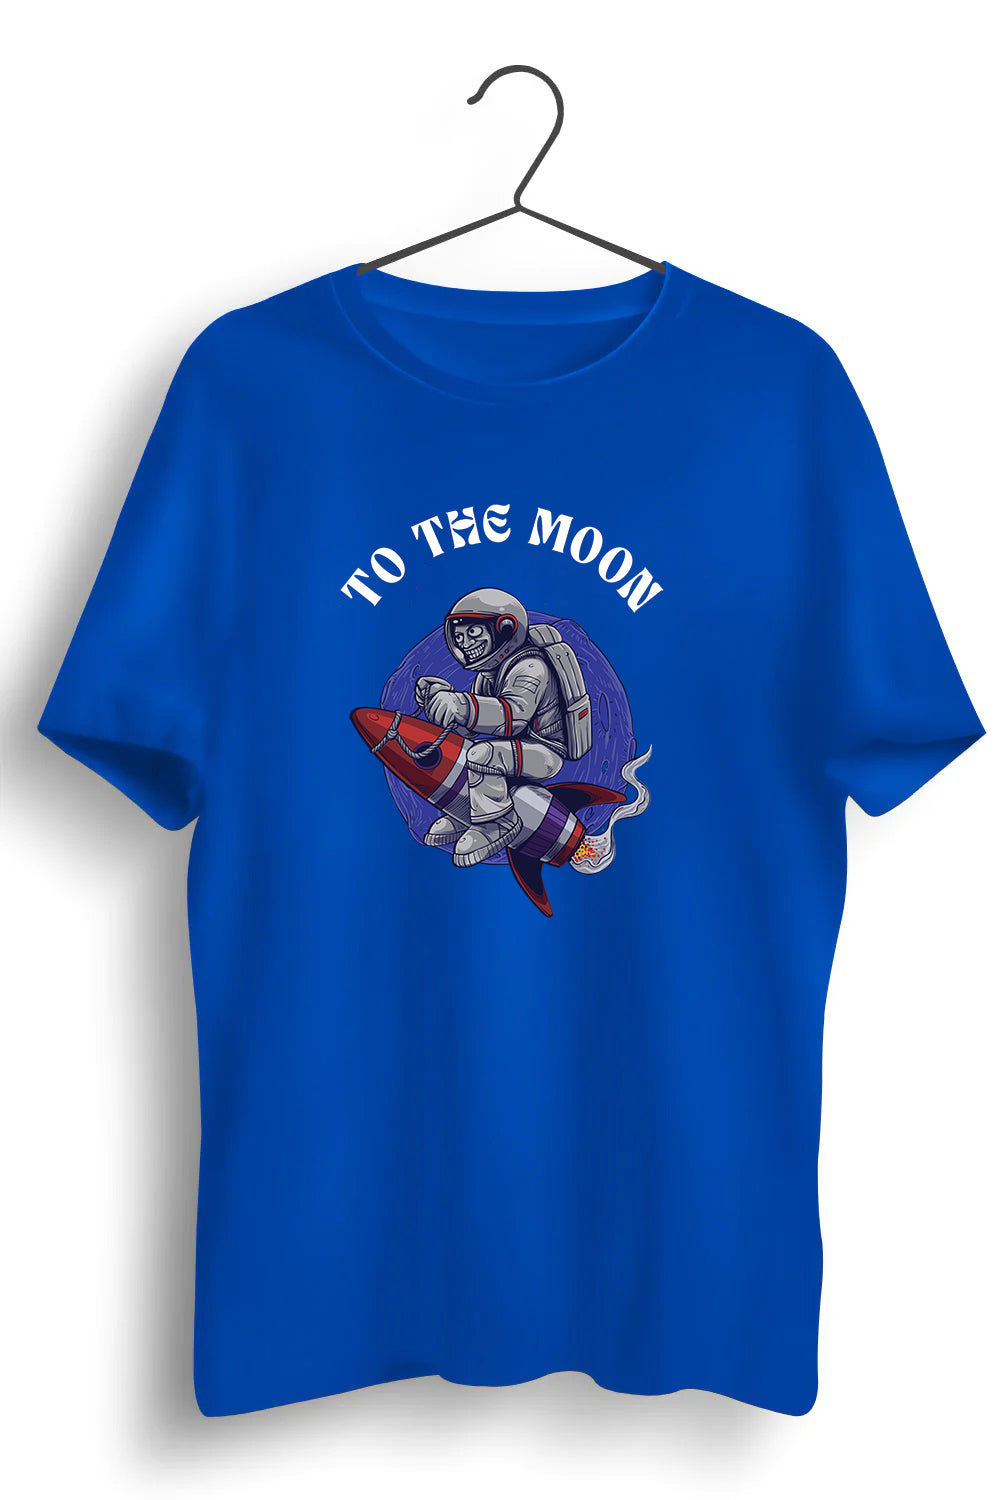 To The Moon Graphic Printed Blue Tshirt